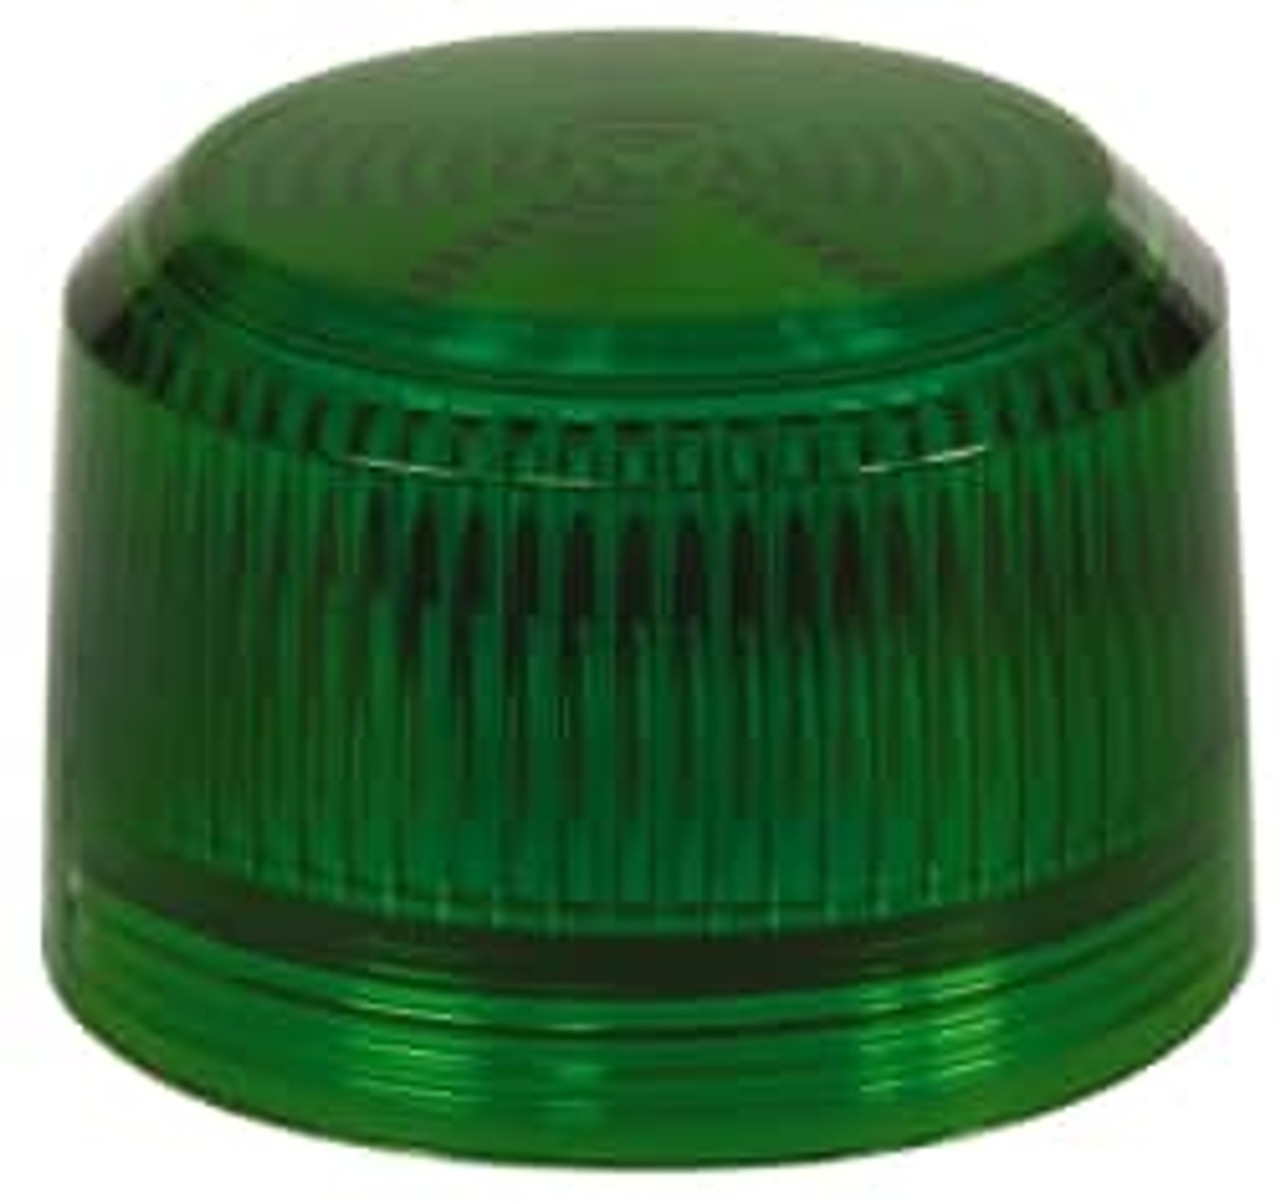 Eaton Cutler-Hammer Round Pilot and Indicator Light Lens Green E34H3 ...